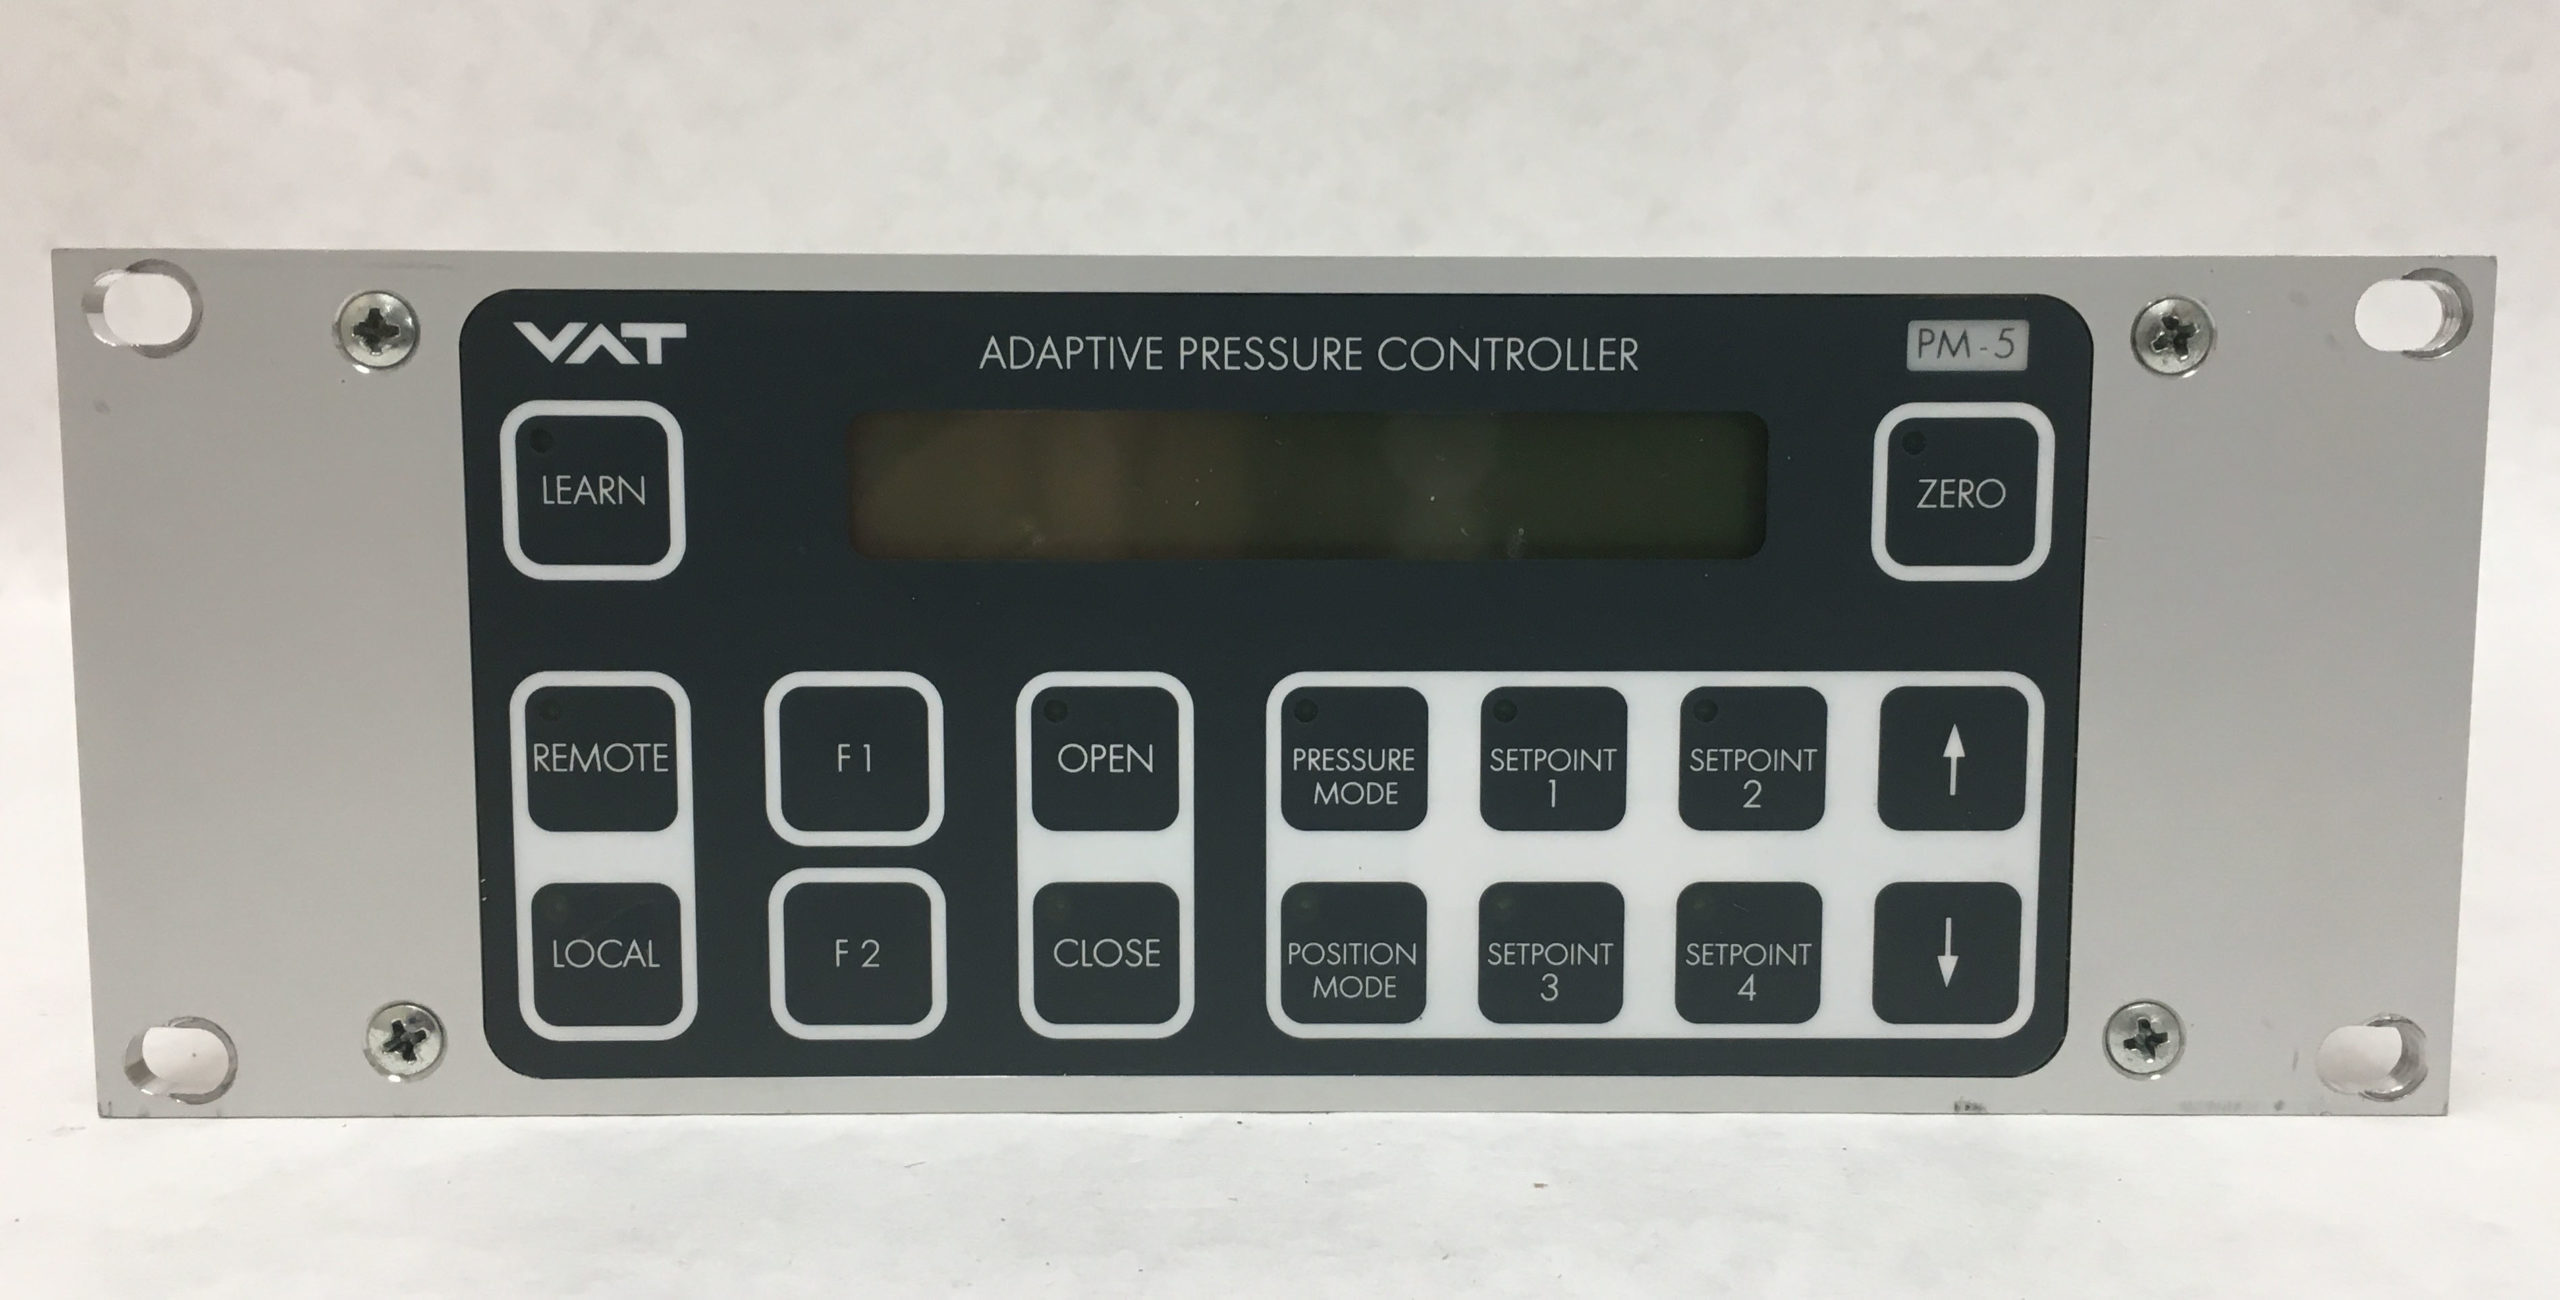 796-093088-001 | LAM Research / VAT PM5 Adaptive Pressure Controller 796-093088-001